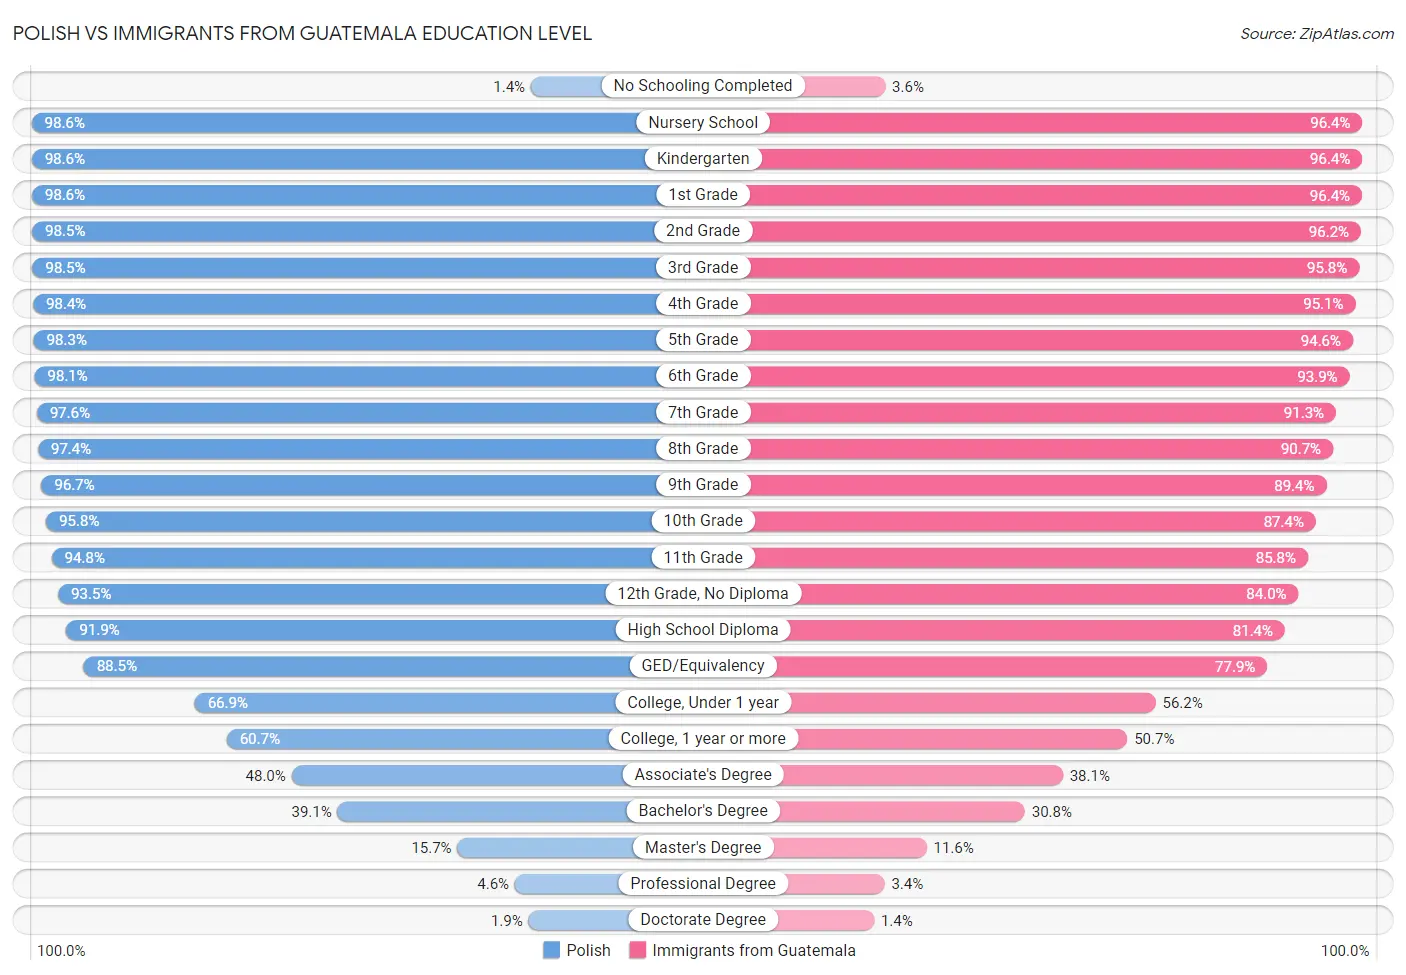 Polish vs Immigrants from Guatemala Education Level